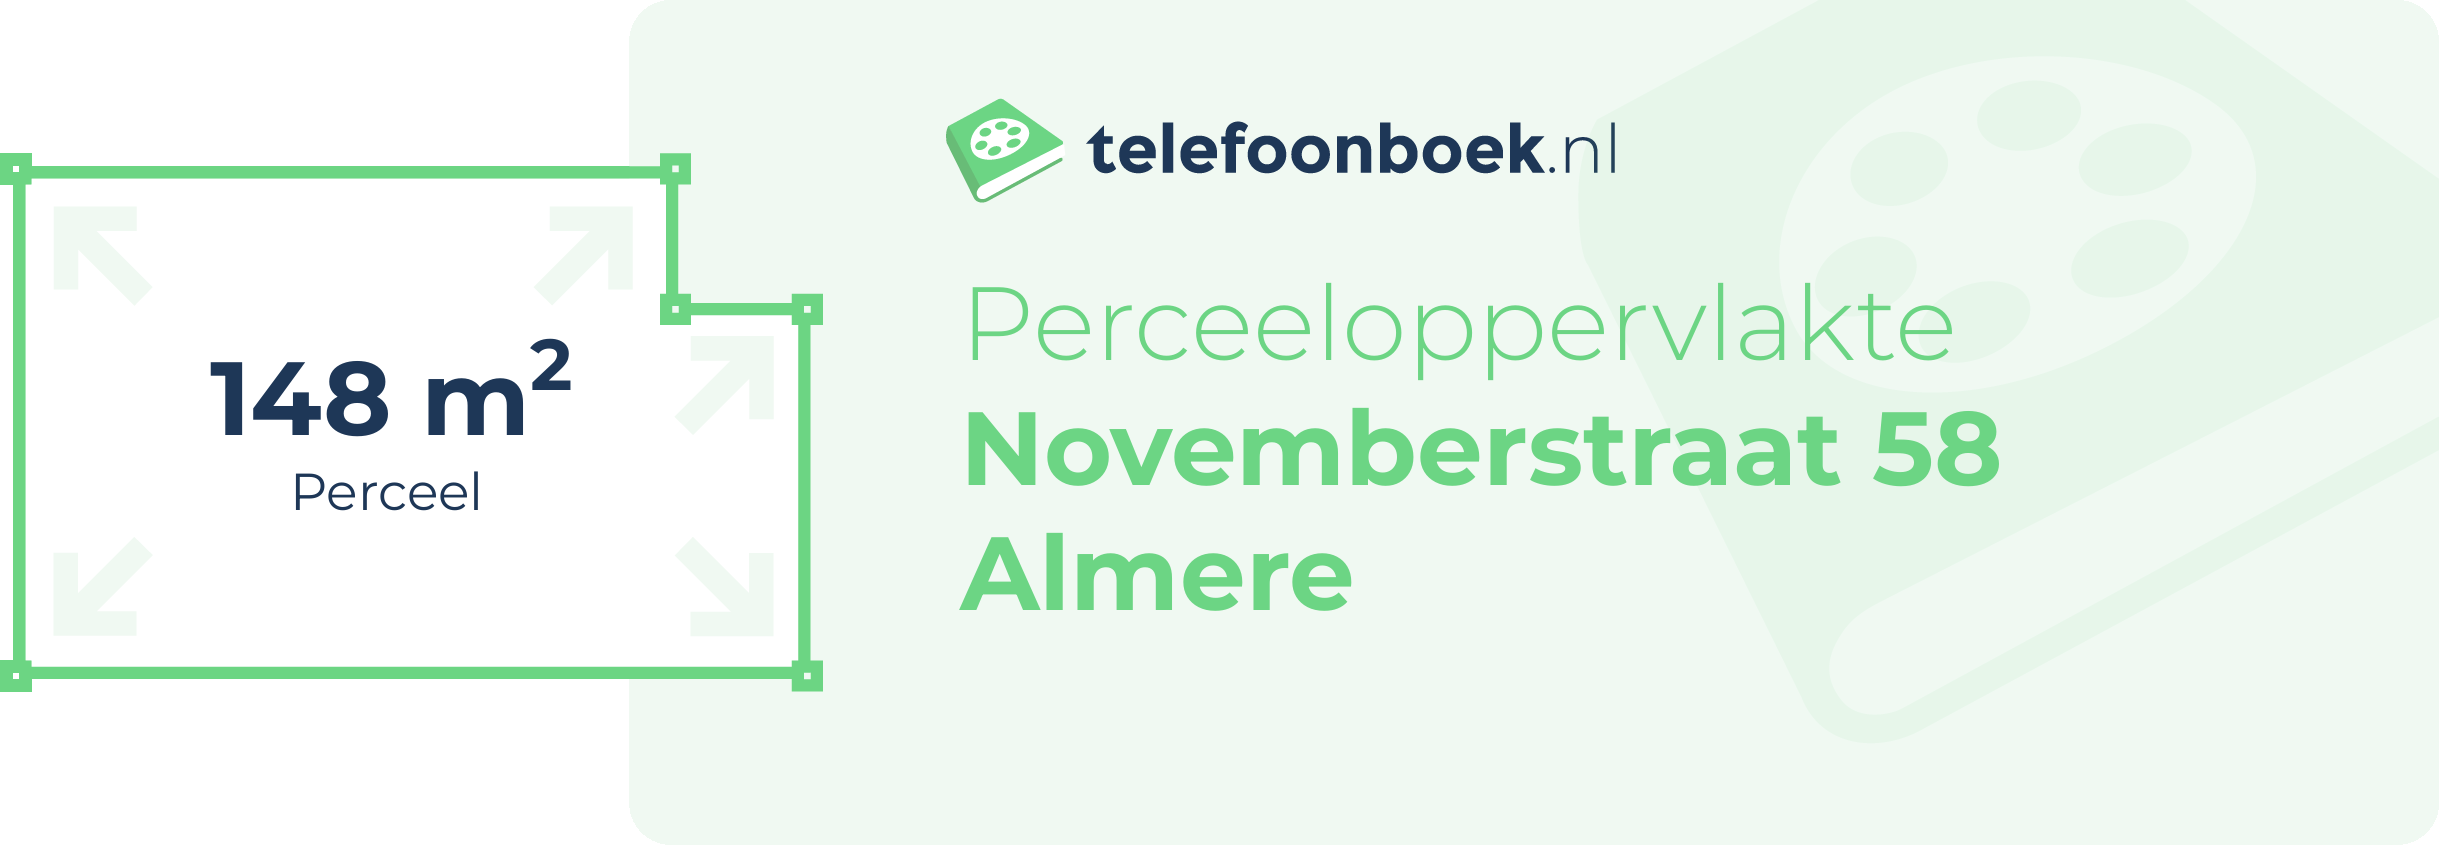 Perceeloppervlakte Novemberstraat 58 Almere